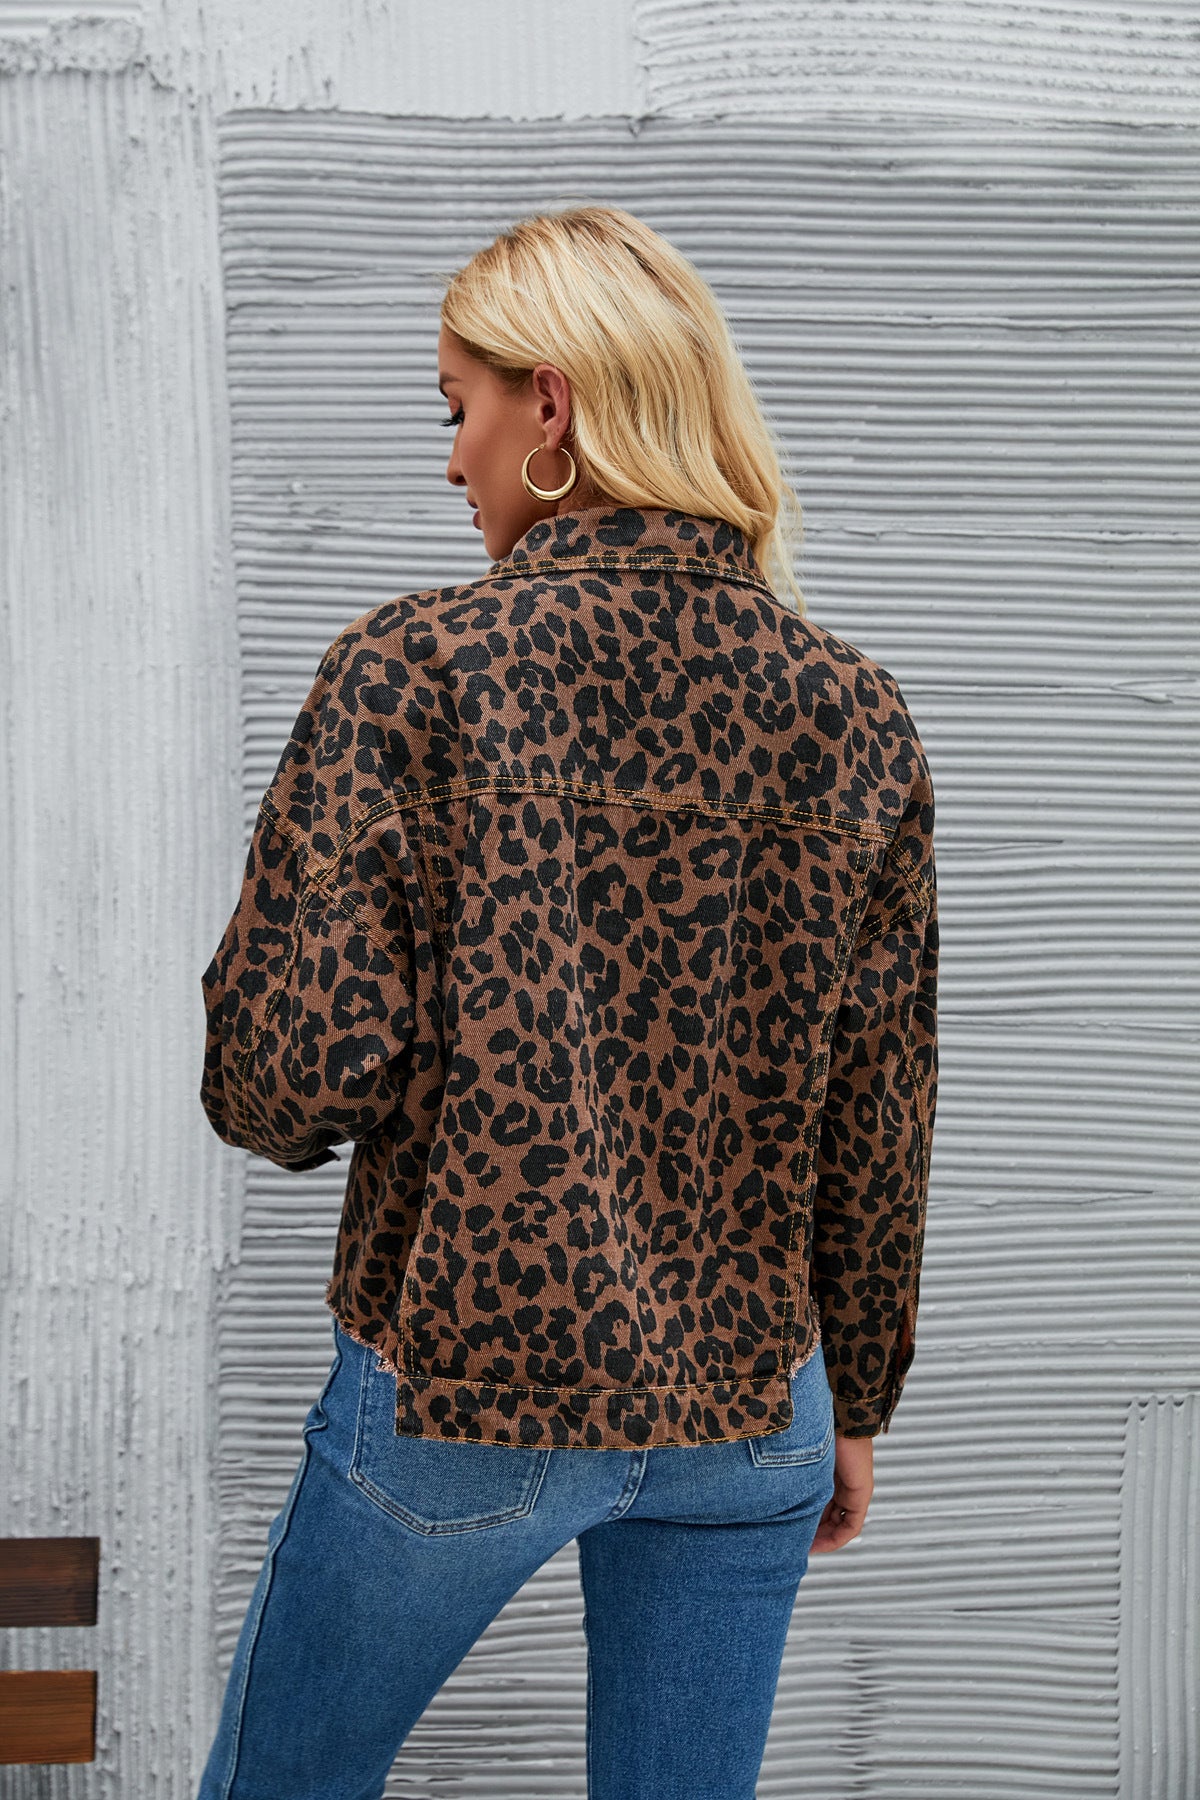 Loose Street Personality Leopard Print Denim Short Coat Women